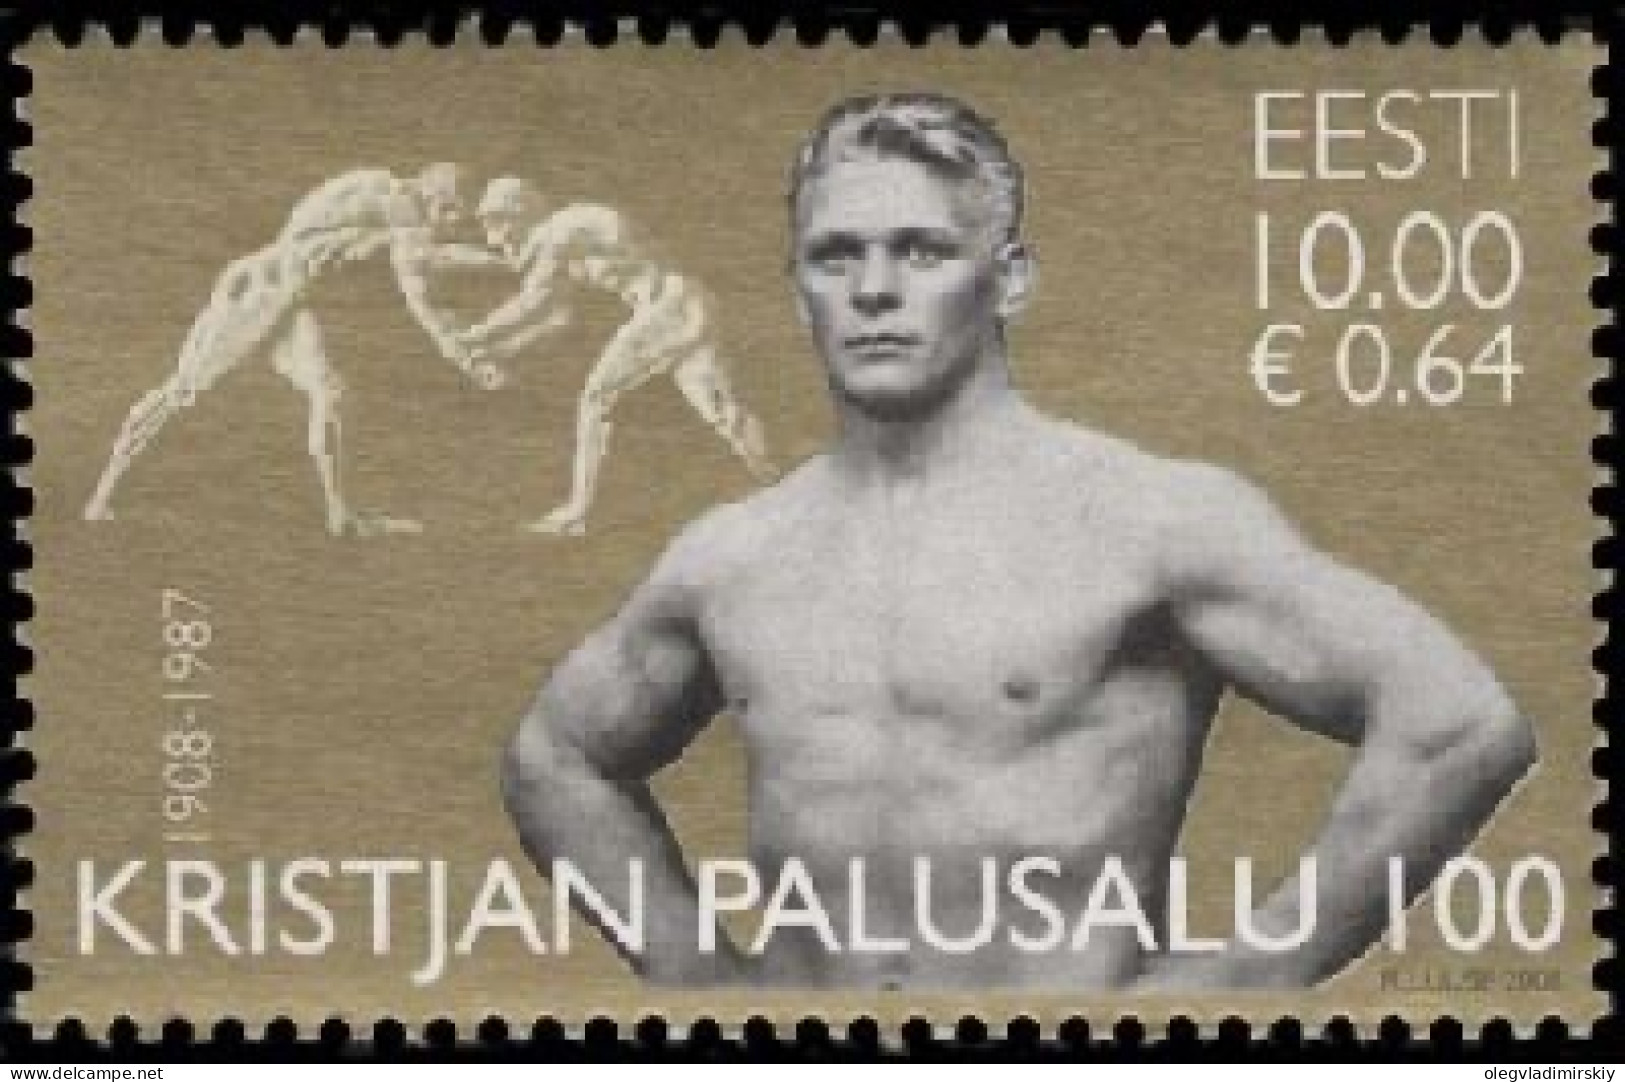 Estonia Estland 2008 Olympic Games Berlin 1936 Kristjan Palusalu Twice Champion Stamp Mint - Lutte